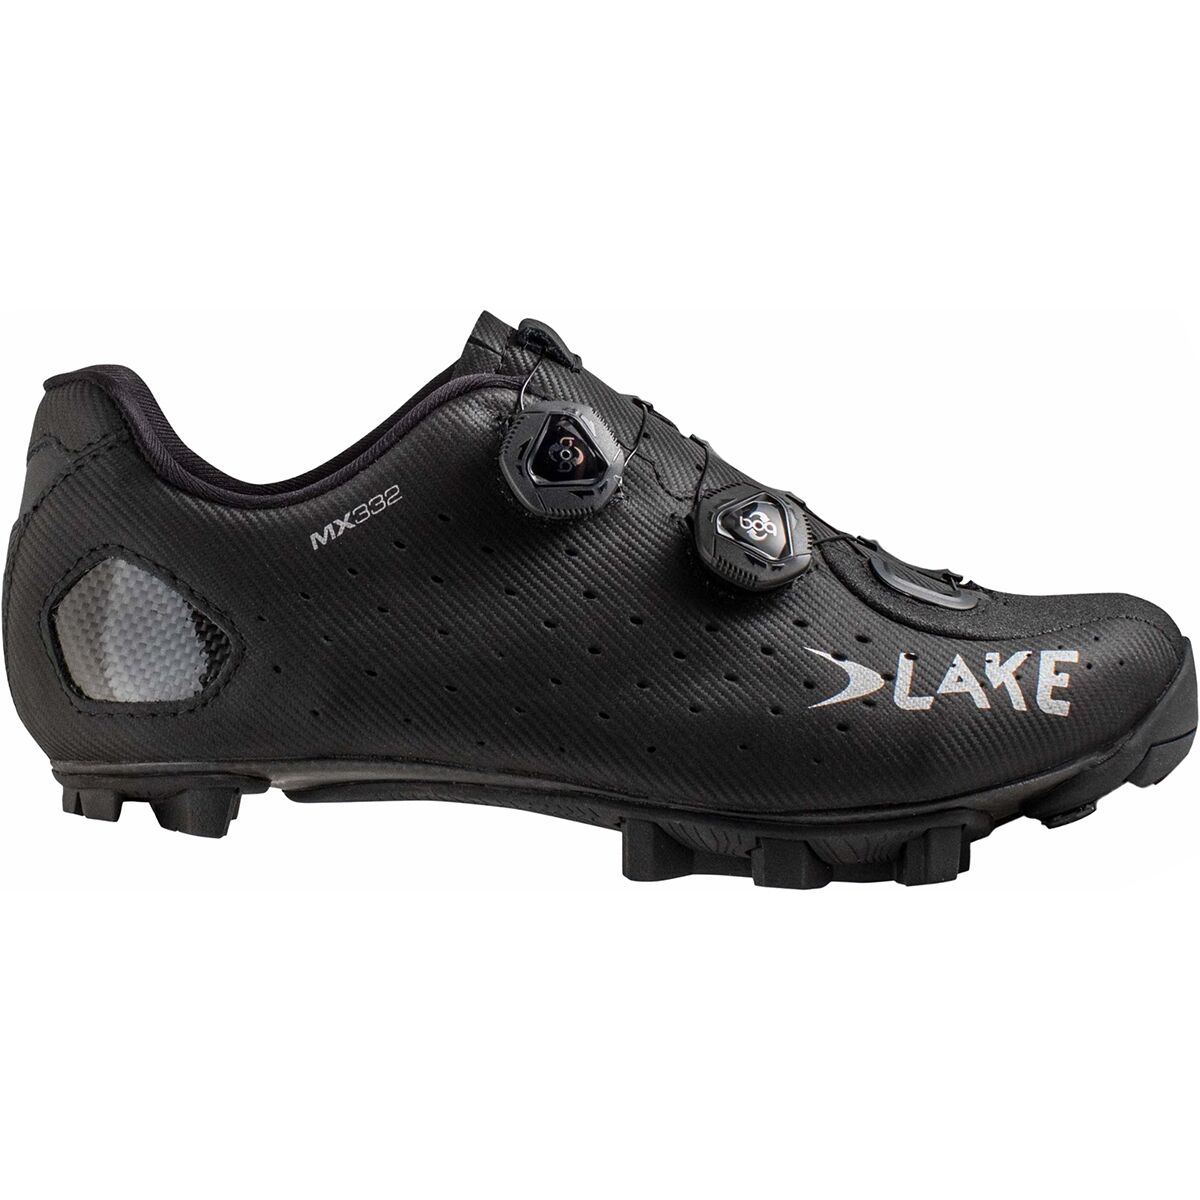 Lake MX332 Cycling Shoe - Women's